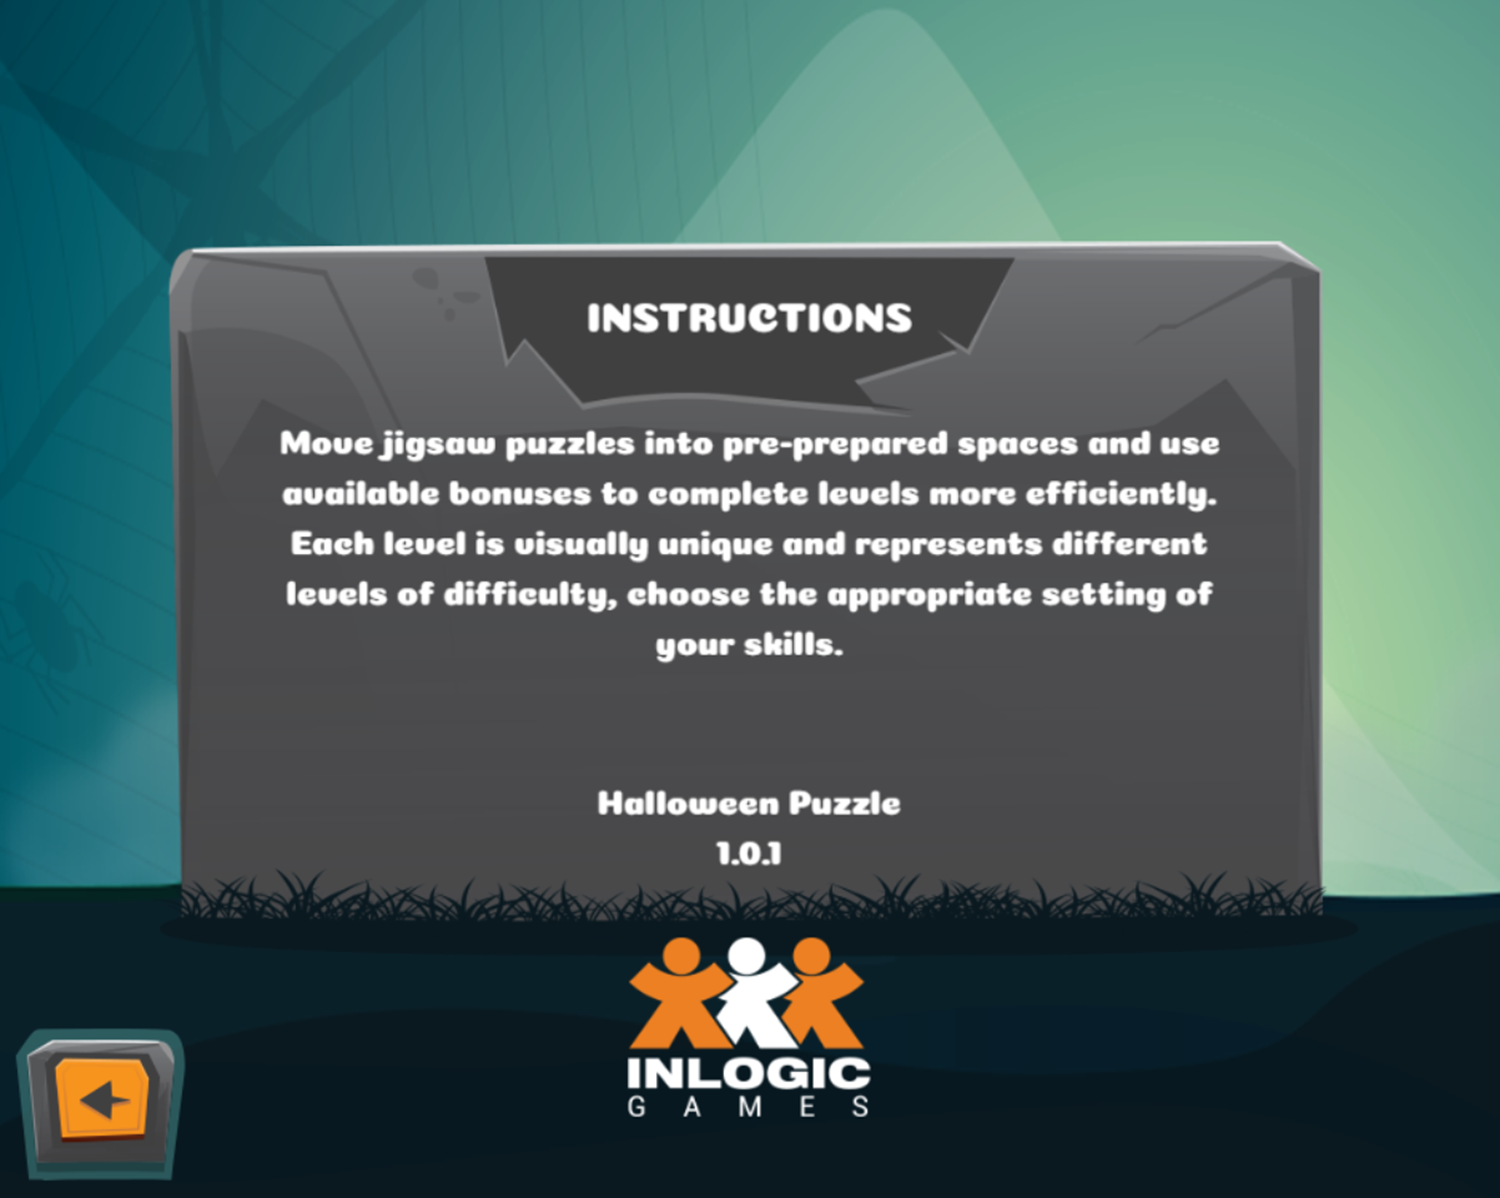 Halloween Puzzle Game Instructions Screenshot.